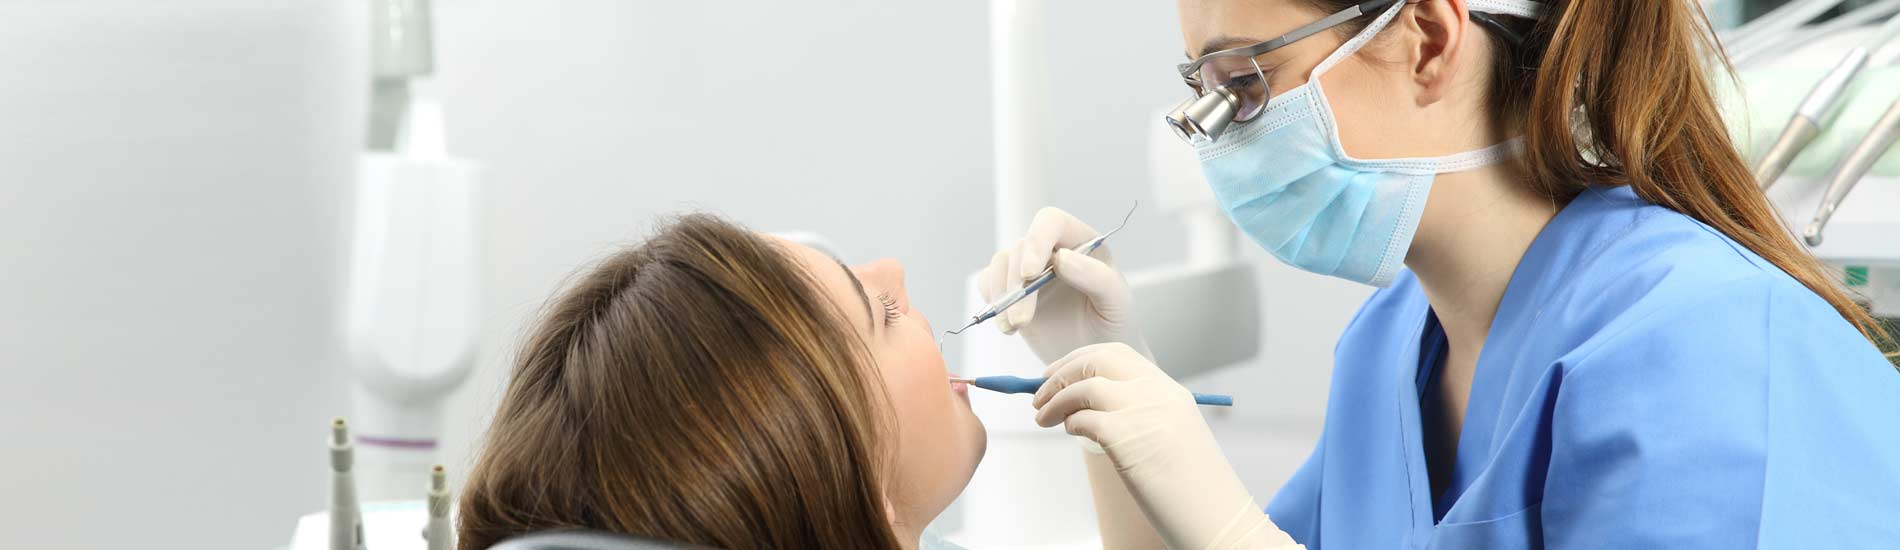 health insurance dentist wisdom teeth